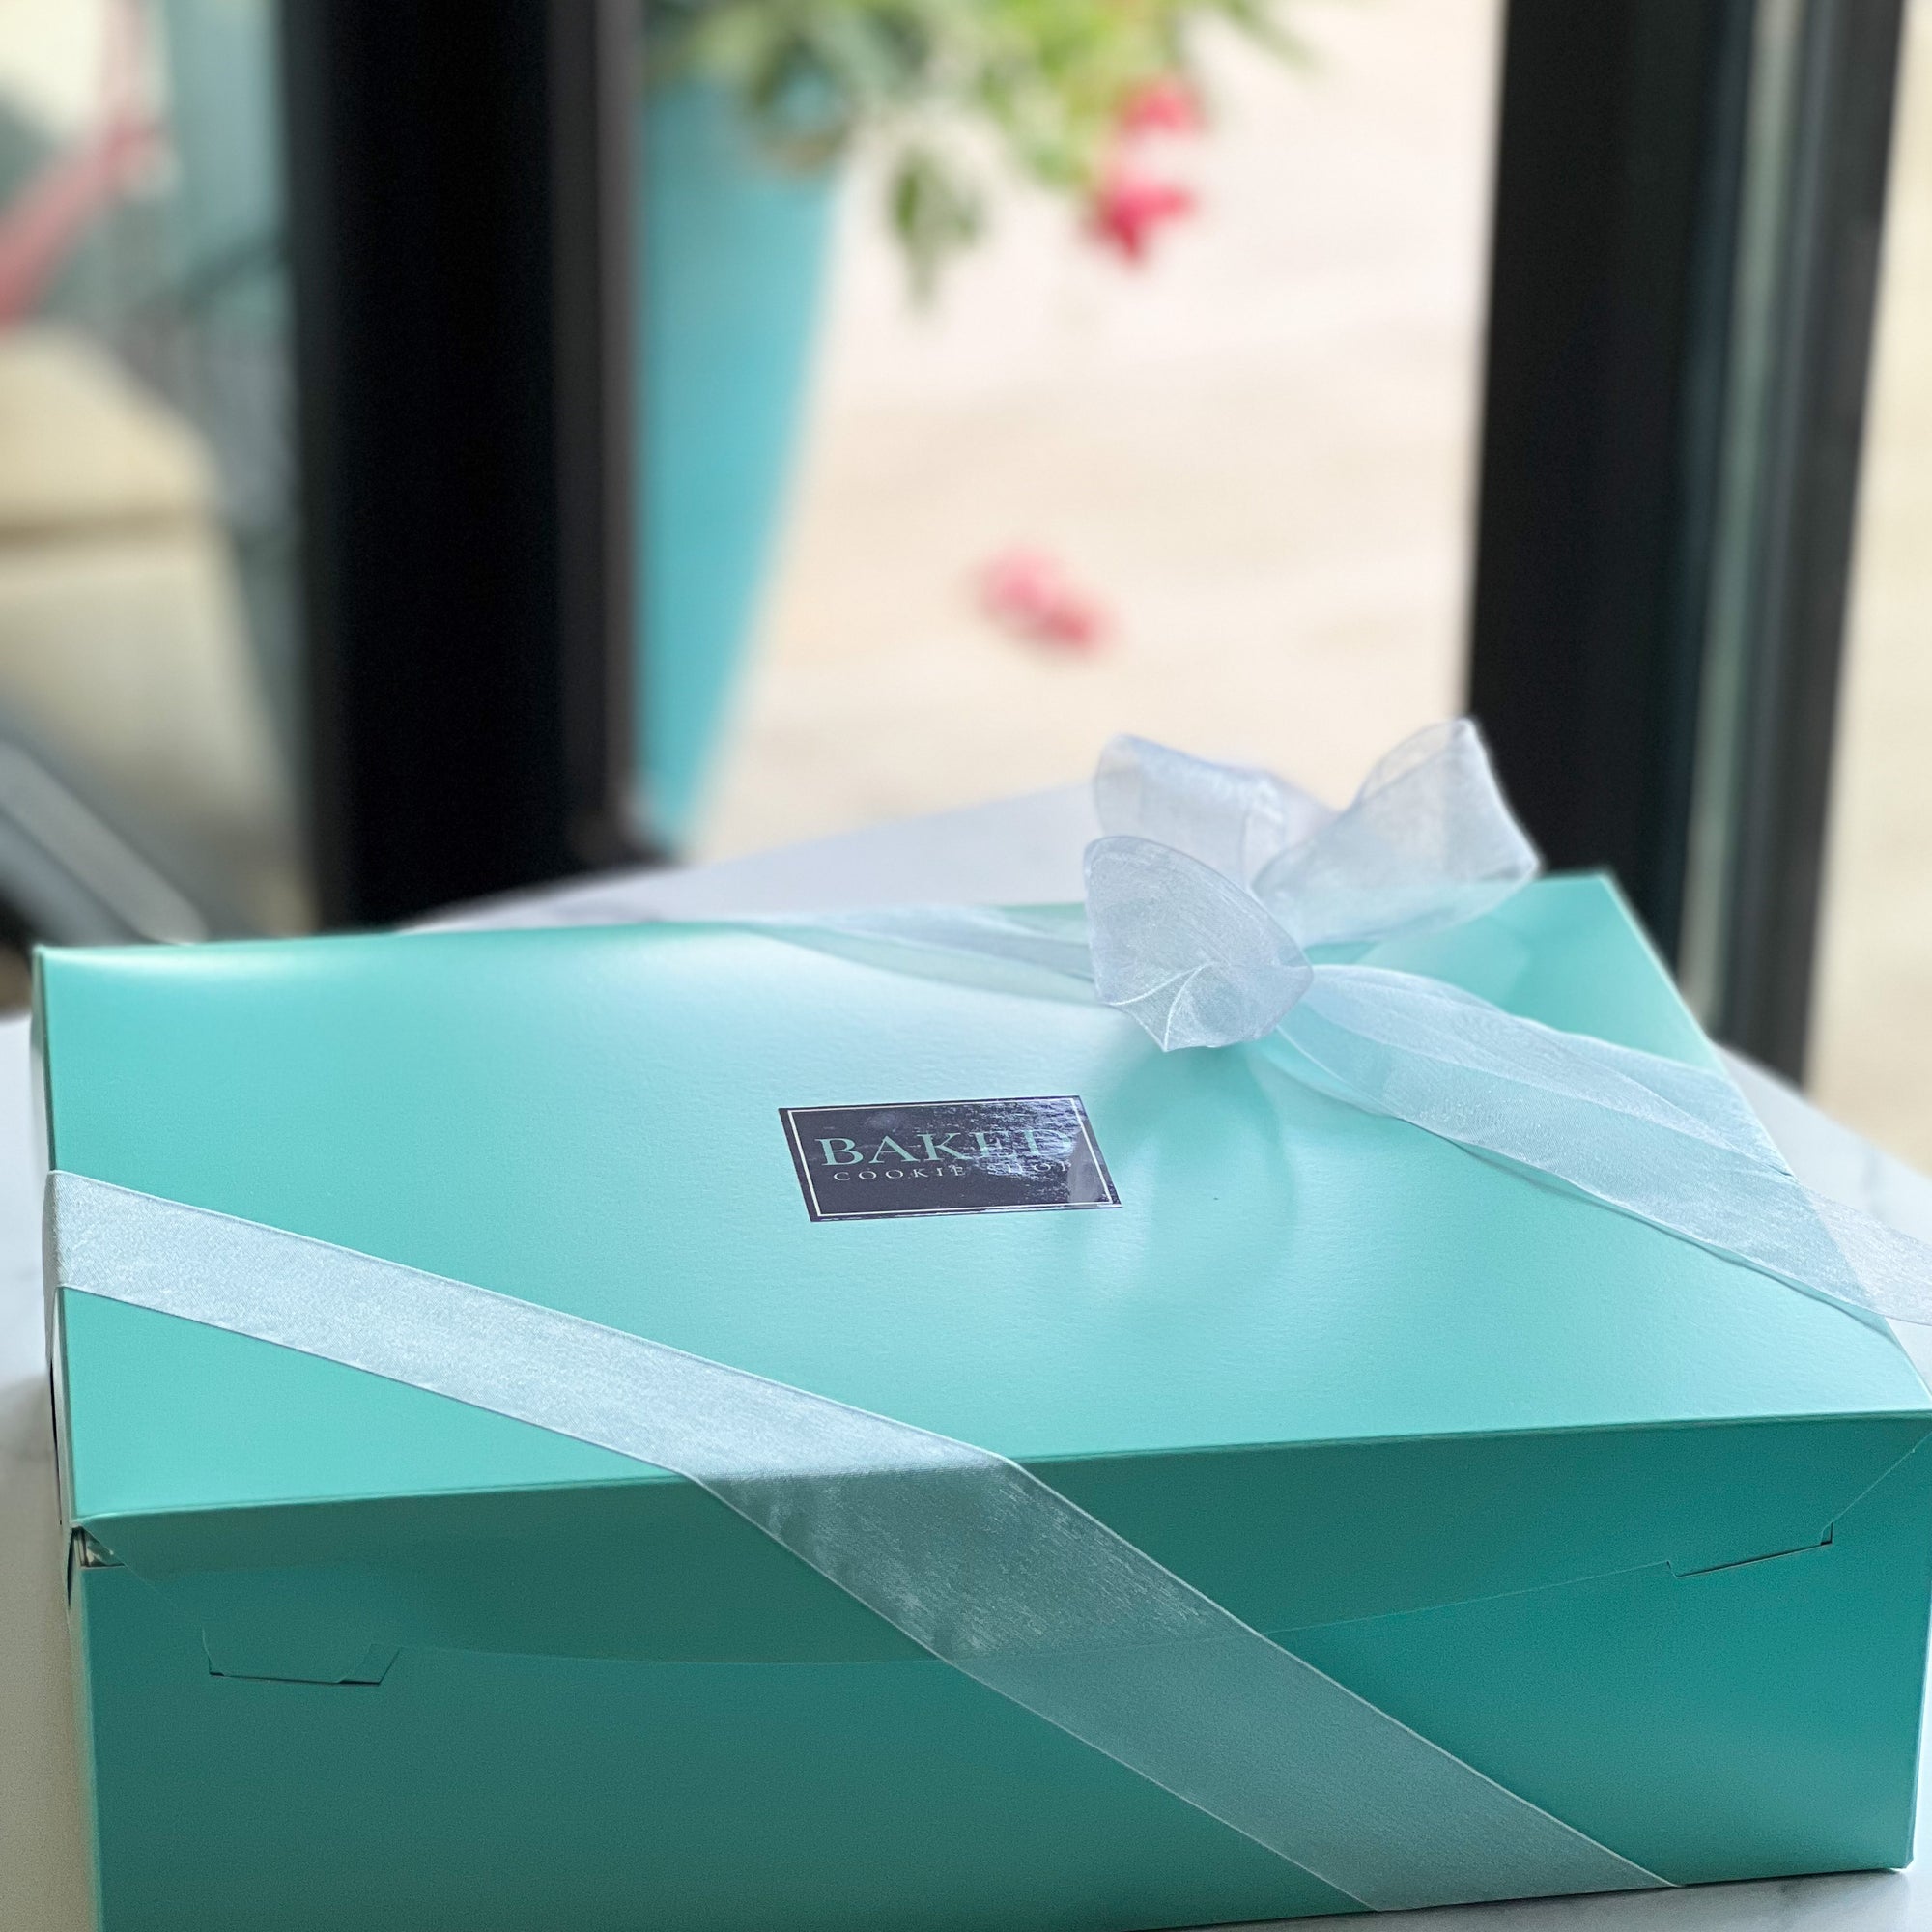 Baked Gift Box #7